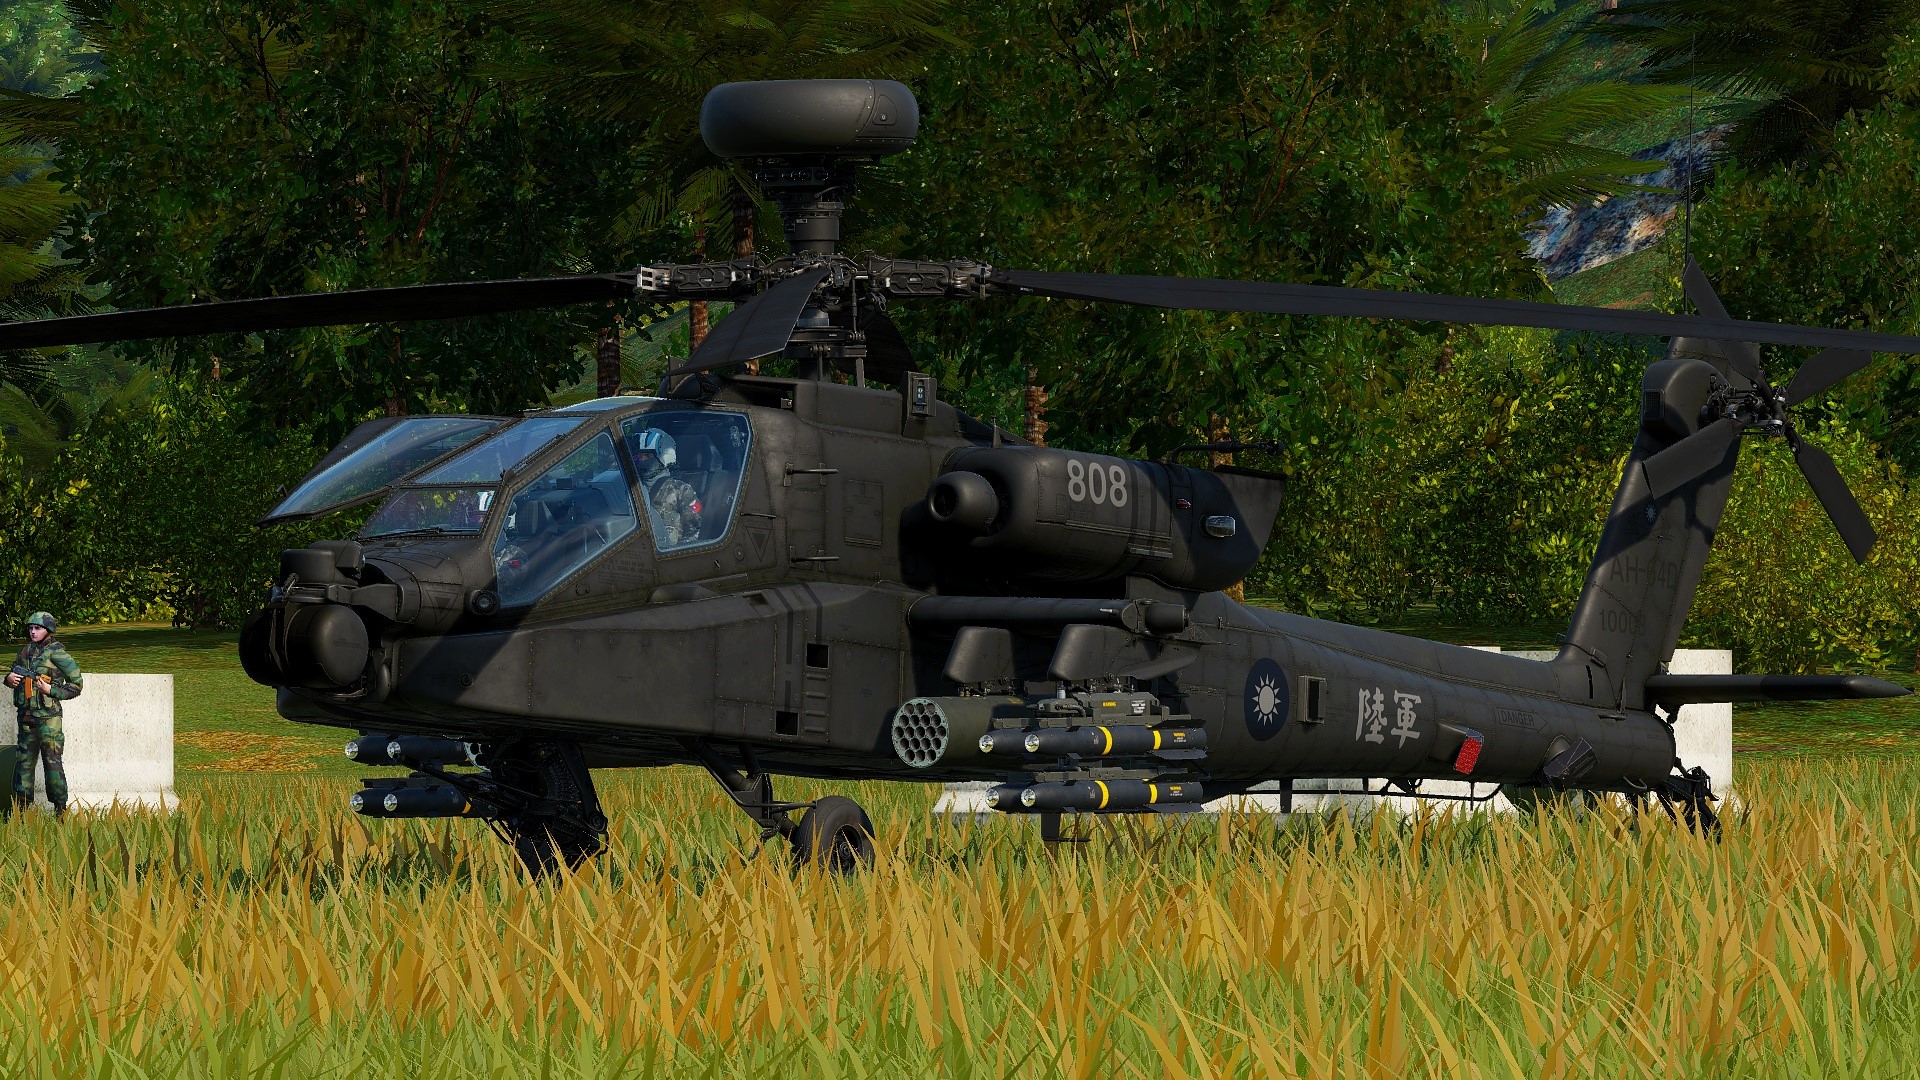 AH-64D Republic of China Army 810/808